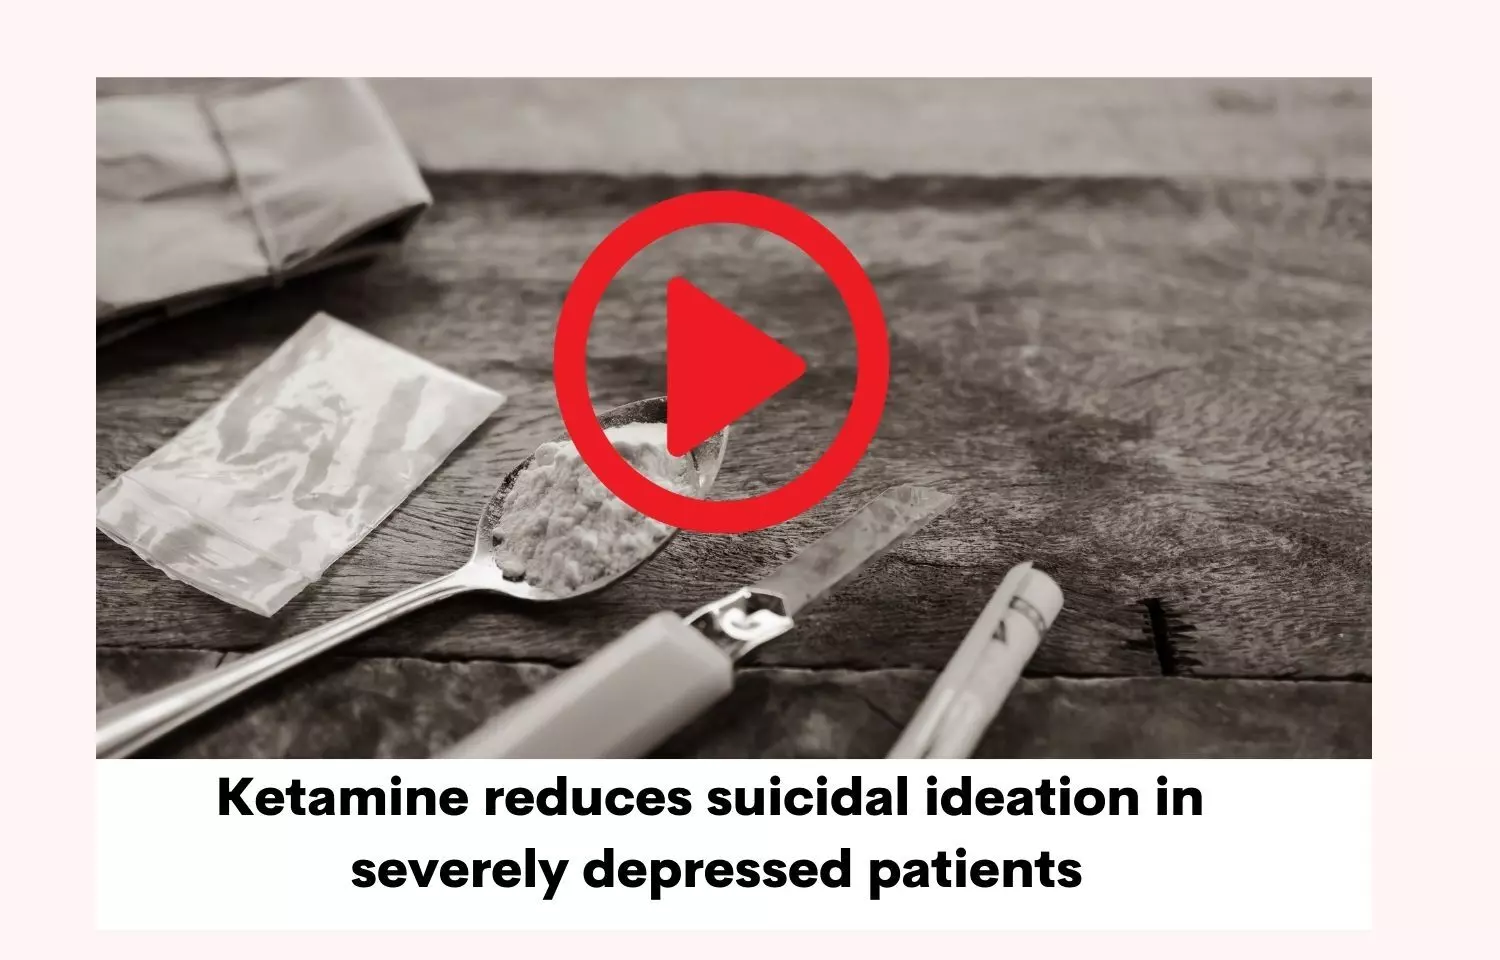 Ketamine reduces suicidal ideation in severely depressed patients